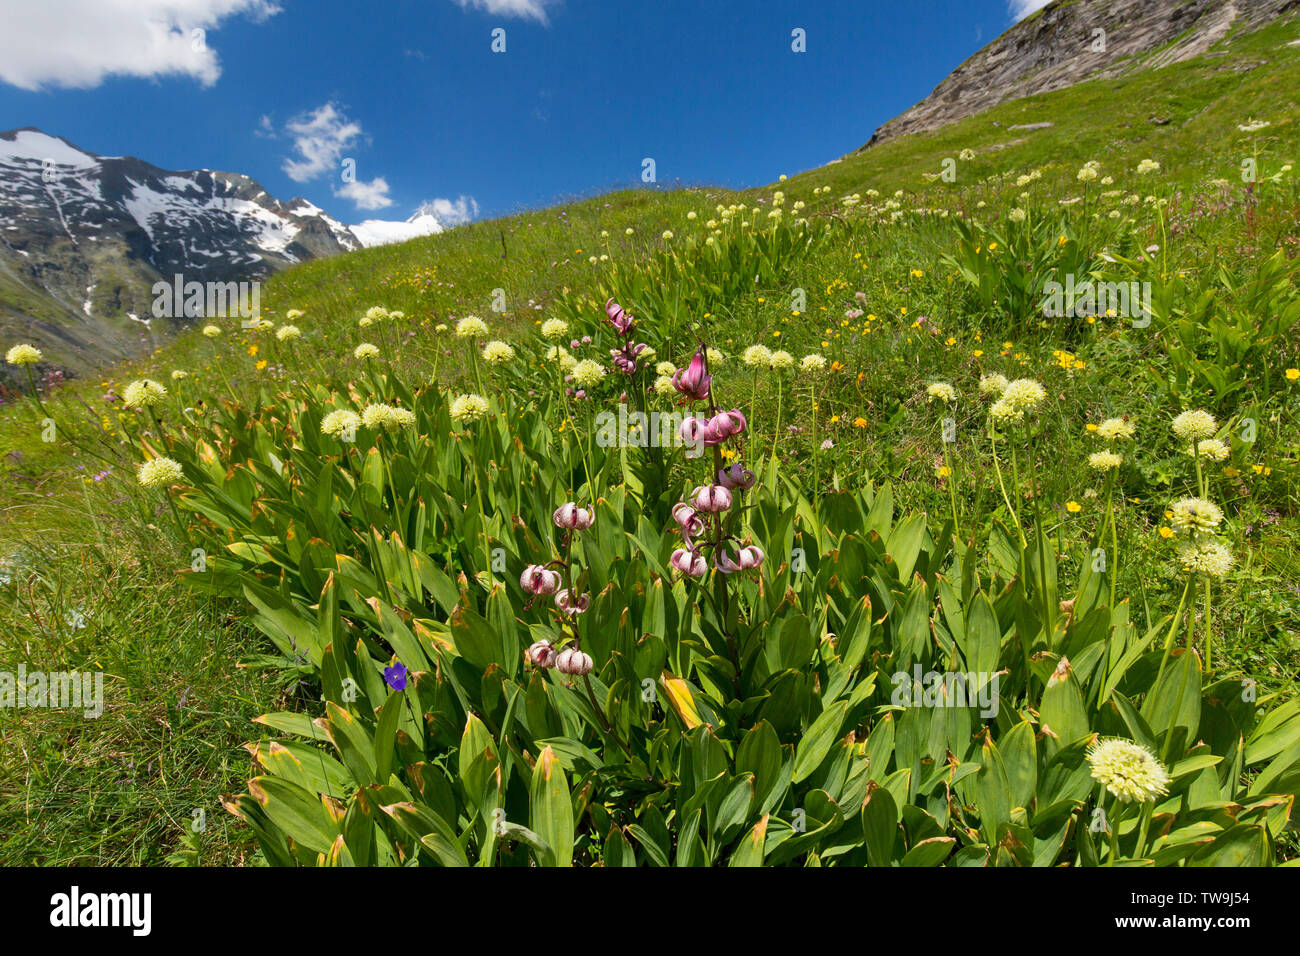 Alpine Leek, Victory Onion ( Allium victorialis) and Turk's Cap, Martagon Lily (Lilium martagon). Flowering plants in mountainous landscape. Stock Photo